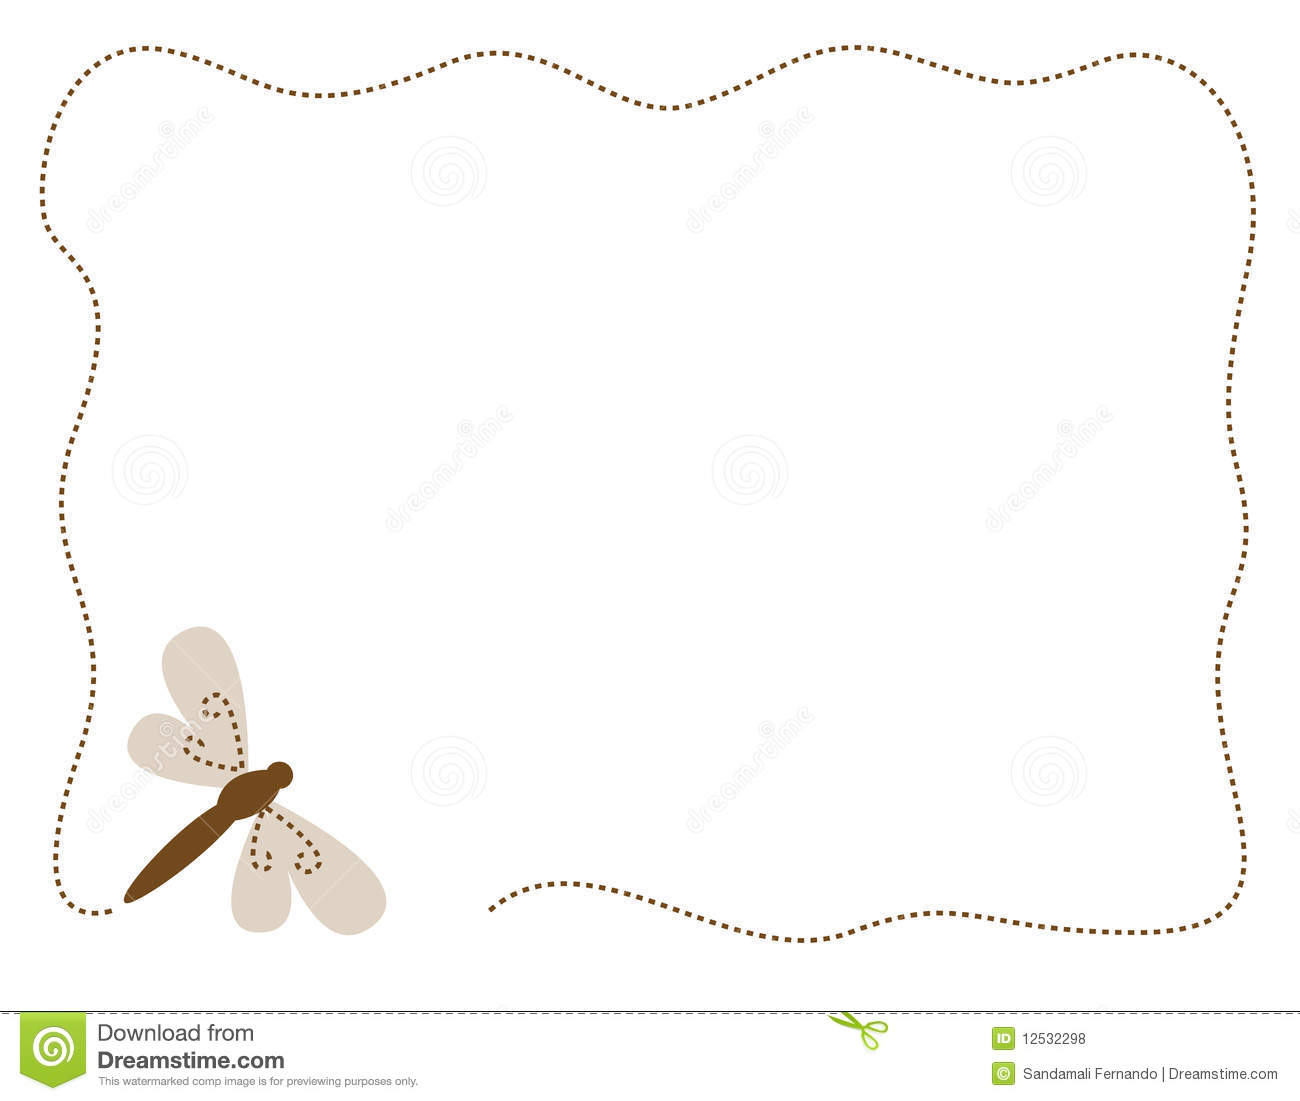 Dragonfly border / frame stock vector. Illustration of branch.